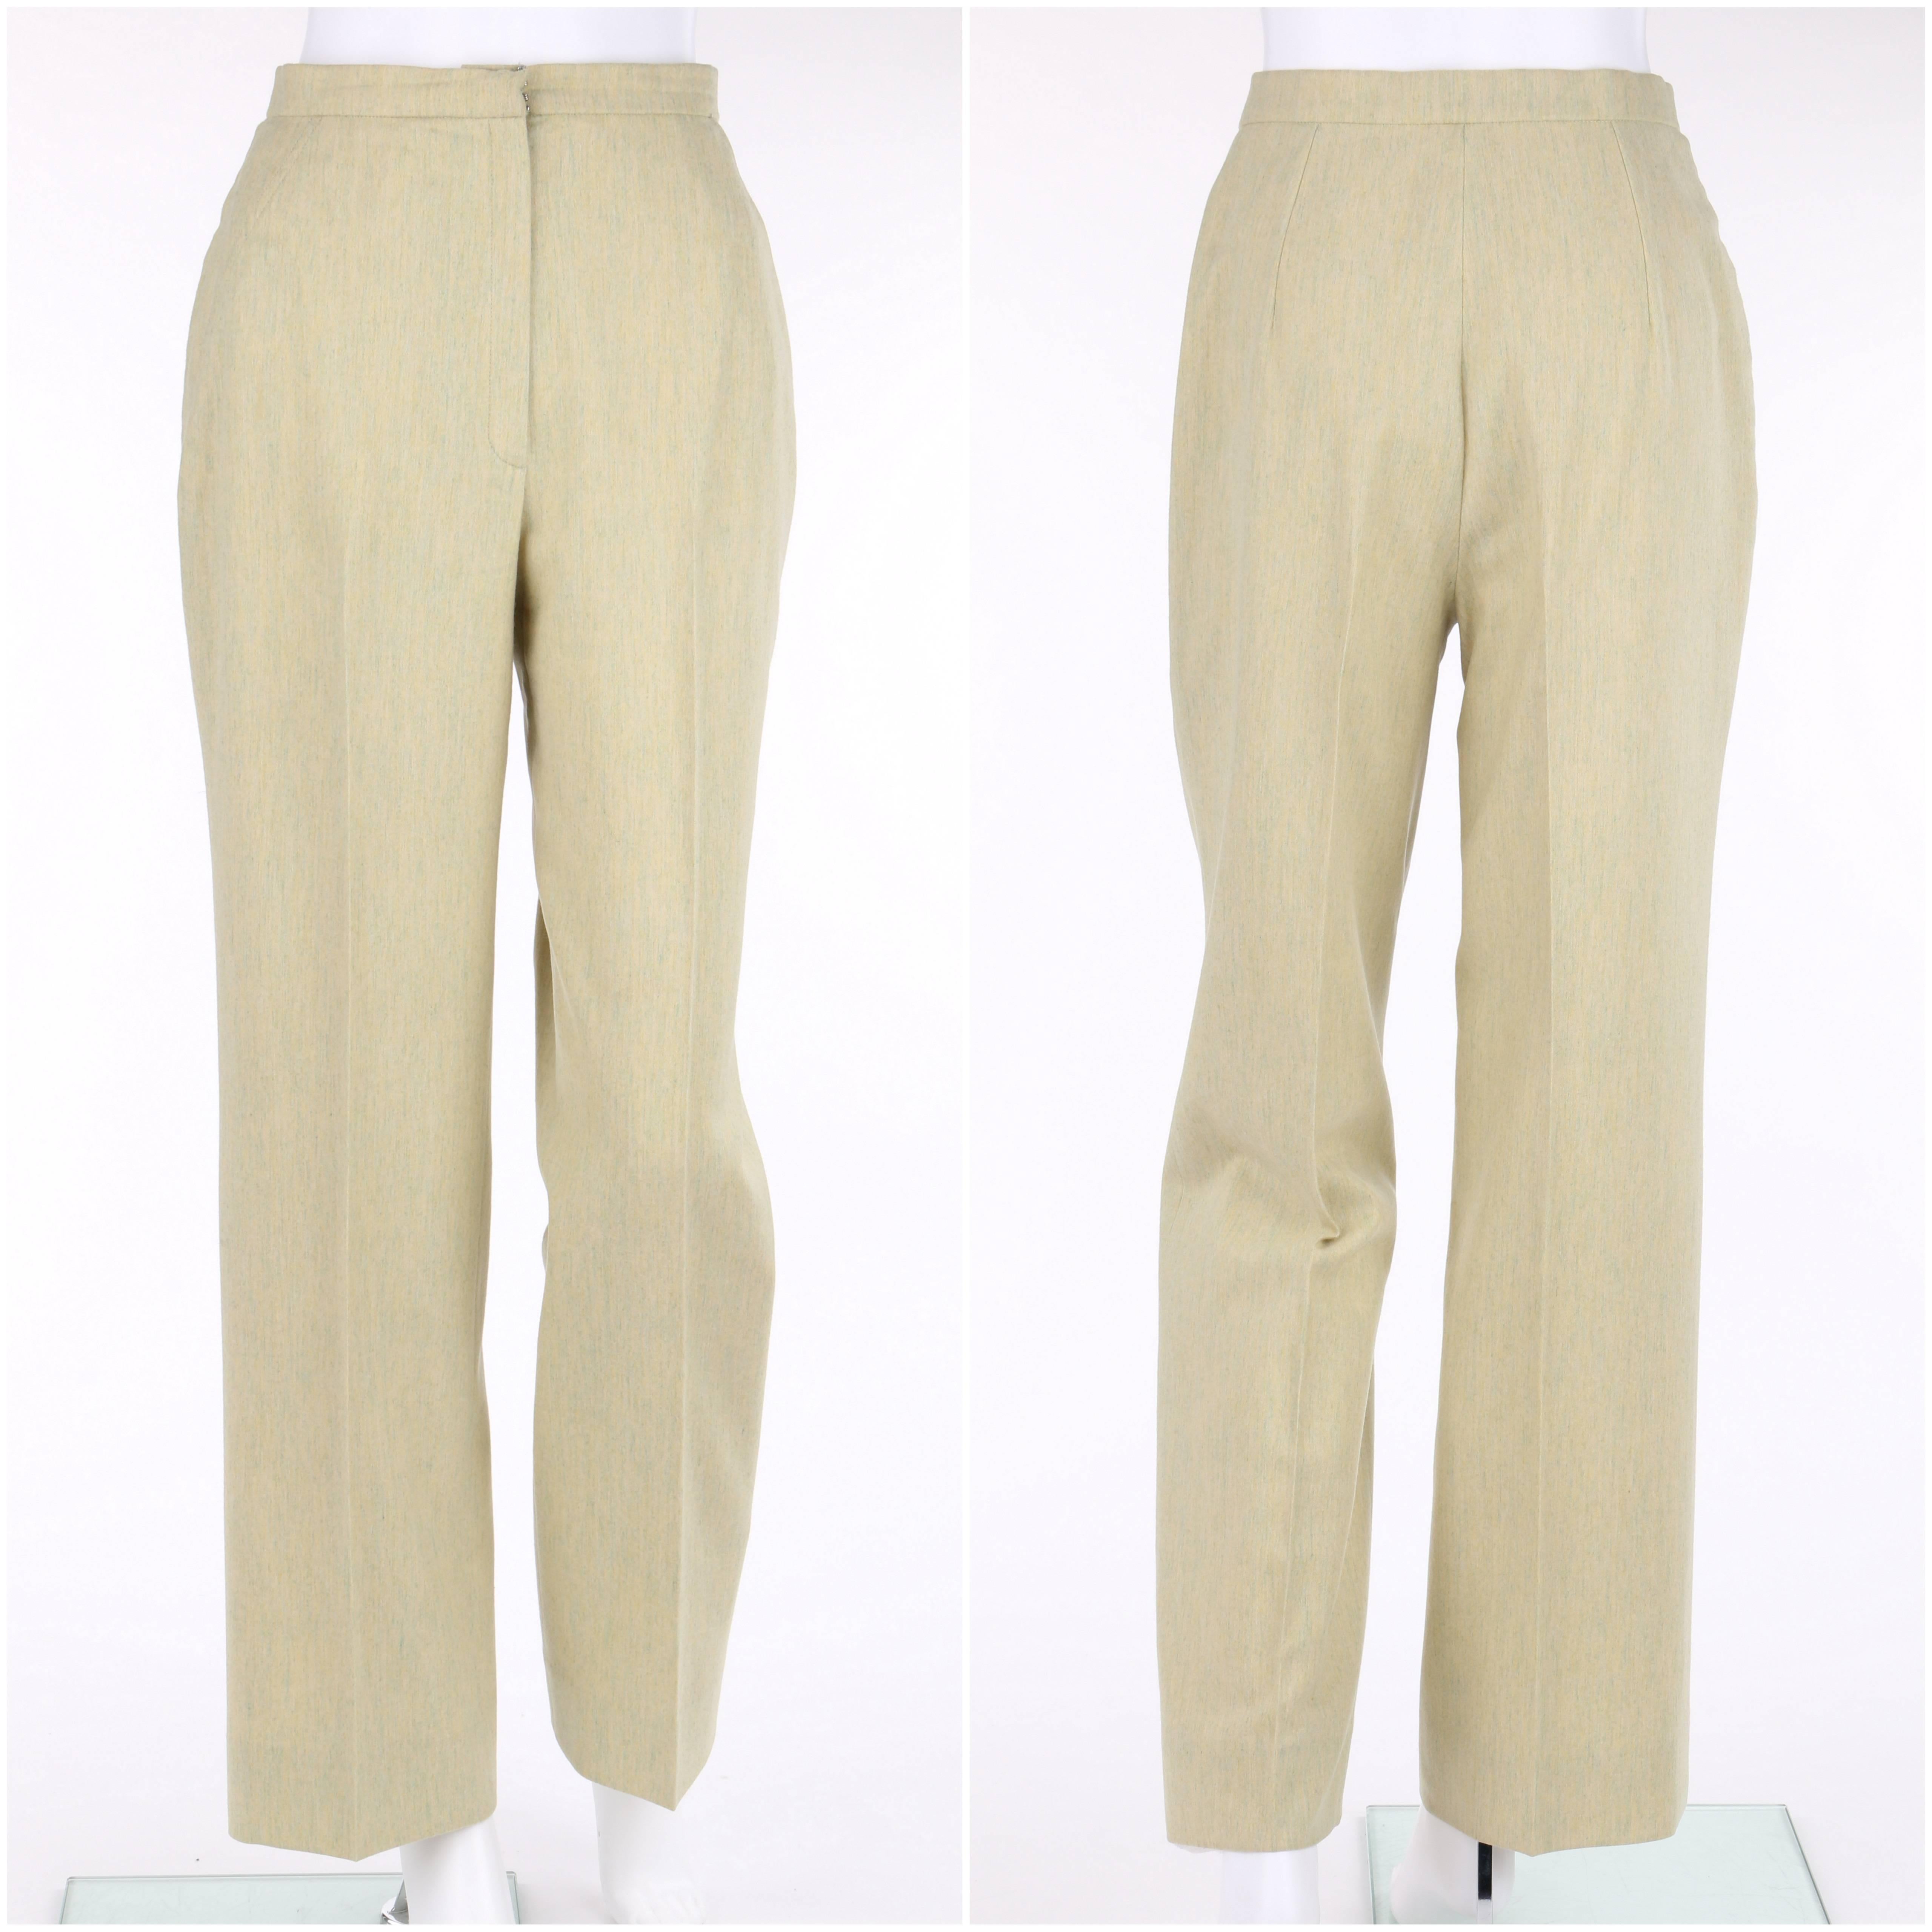 GIVENCHY Couture A/W 1998 ALEXANDER McQUEEN 3 Pc Suit Jacket Skirt Pants Set 1